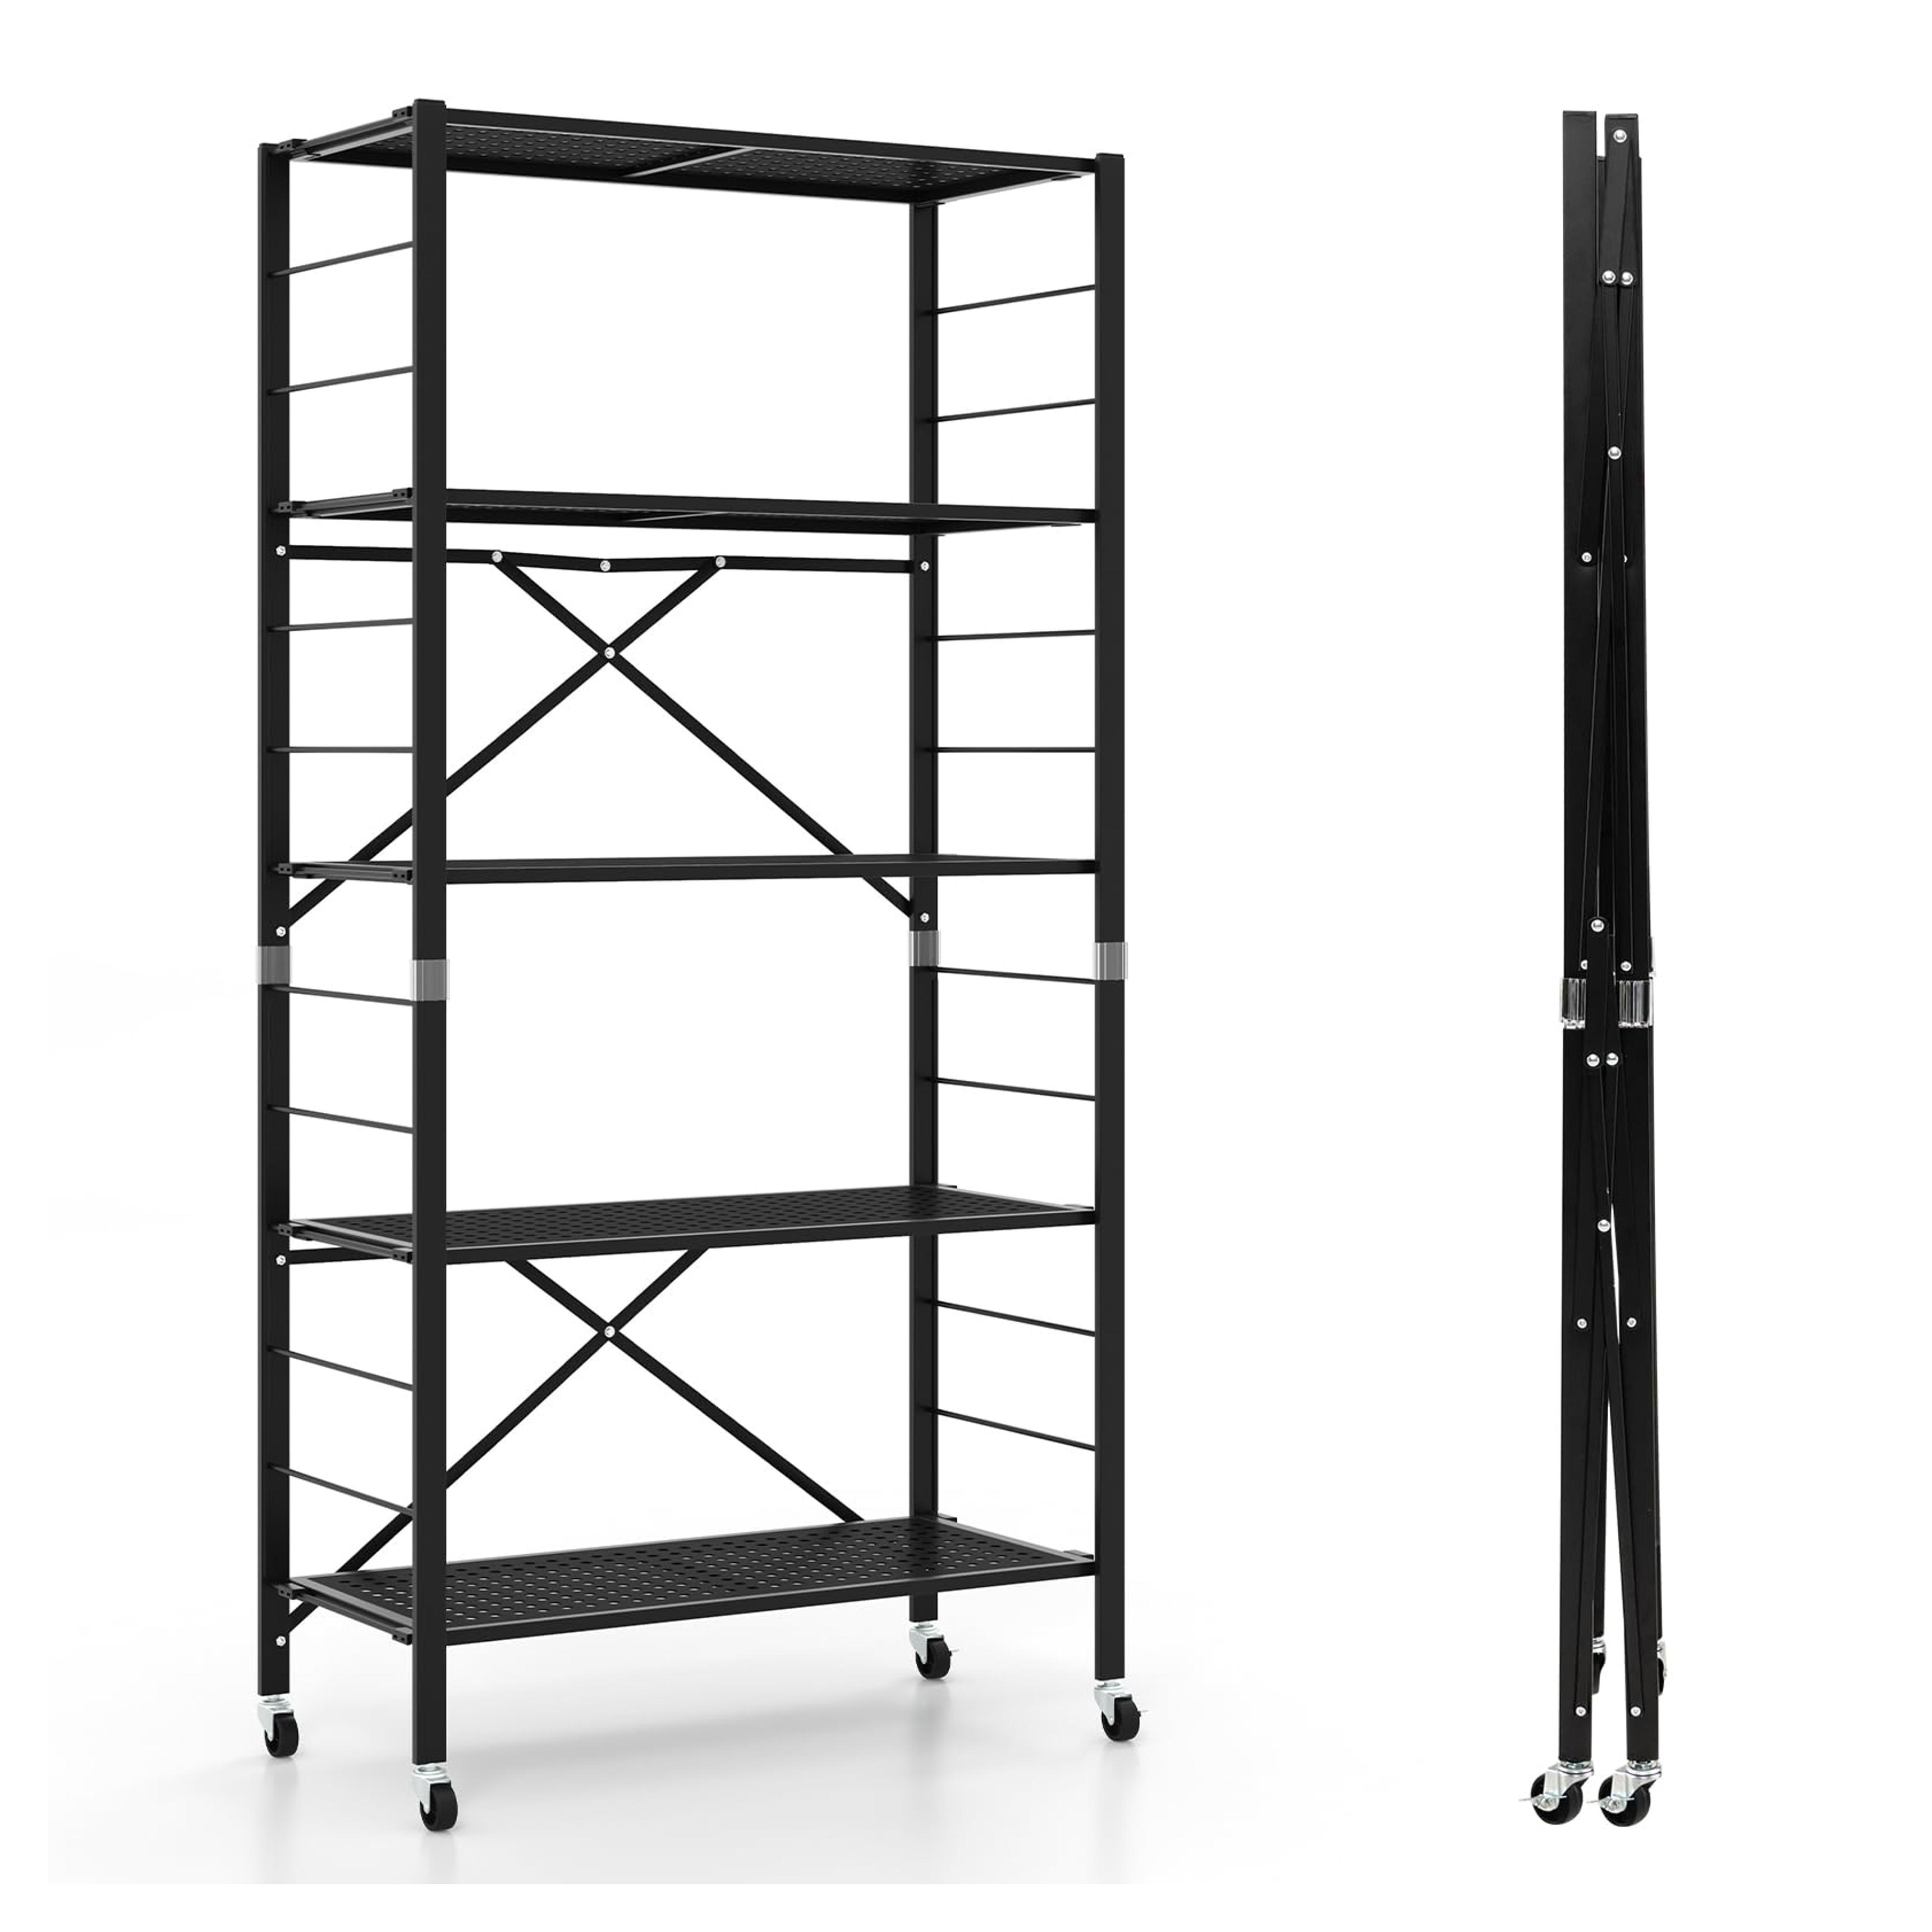 GOFLAME Folding Storage Shelves, 5-Tier Adjustable Shelves with Wheels, Detachable Shelving Unit, Large Capacity, Storage Rack for Garage, Kitchen, Balcony, Living Room, Black